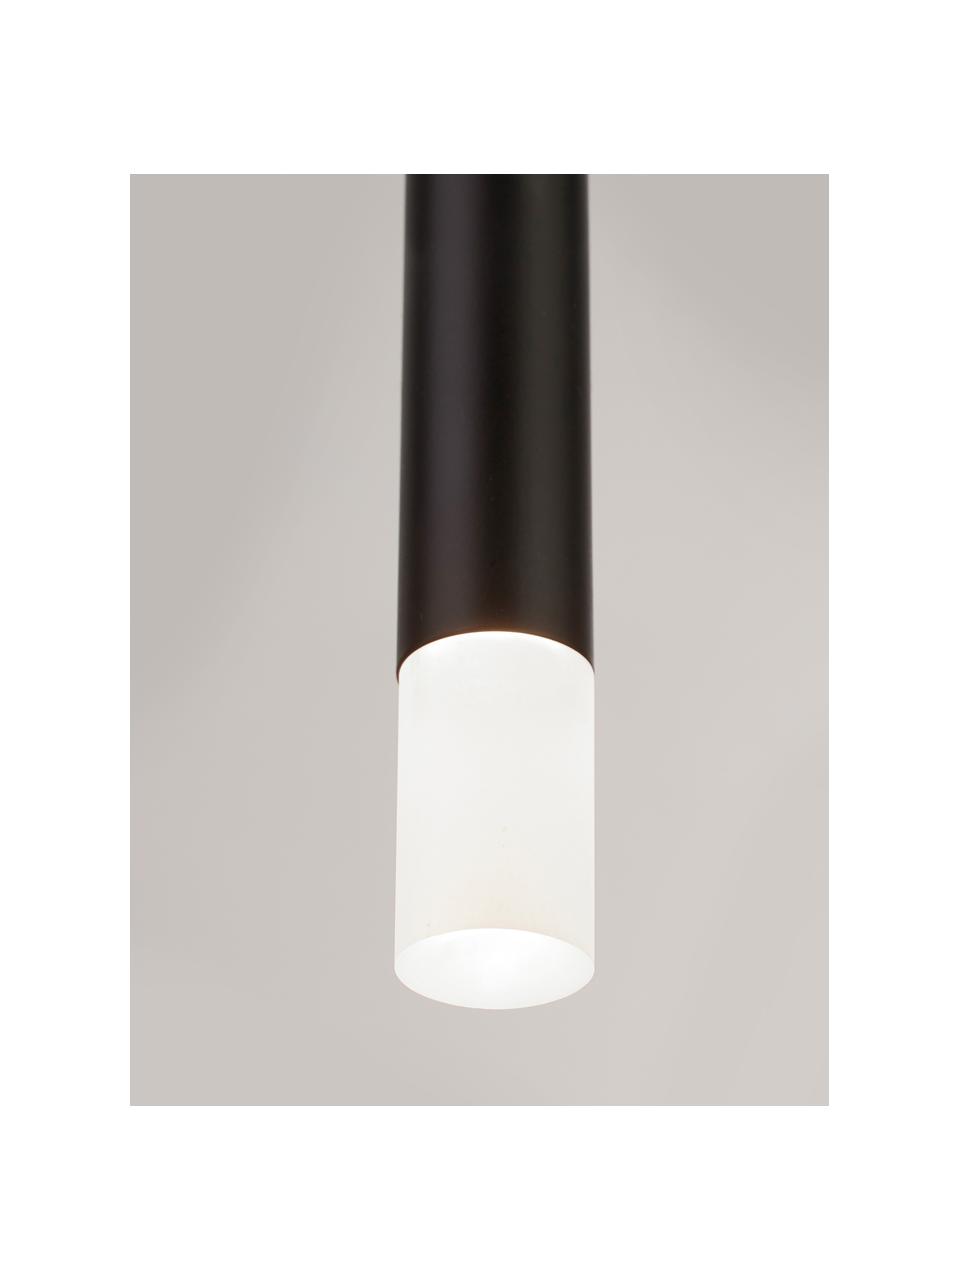 Malá závesná LED lampa Wands, Čierna, biela, Ø 3 x V 43 cm